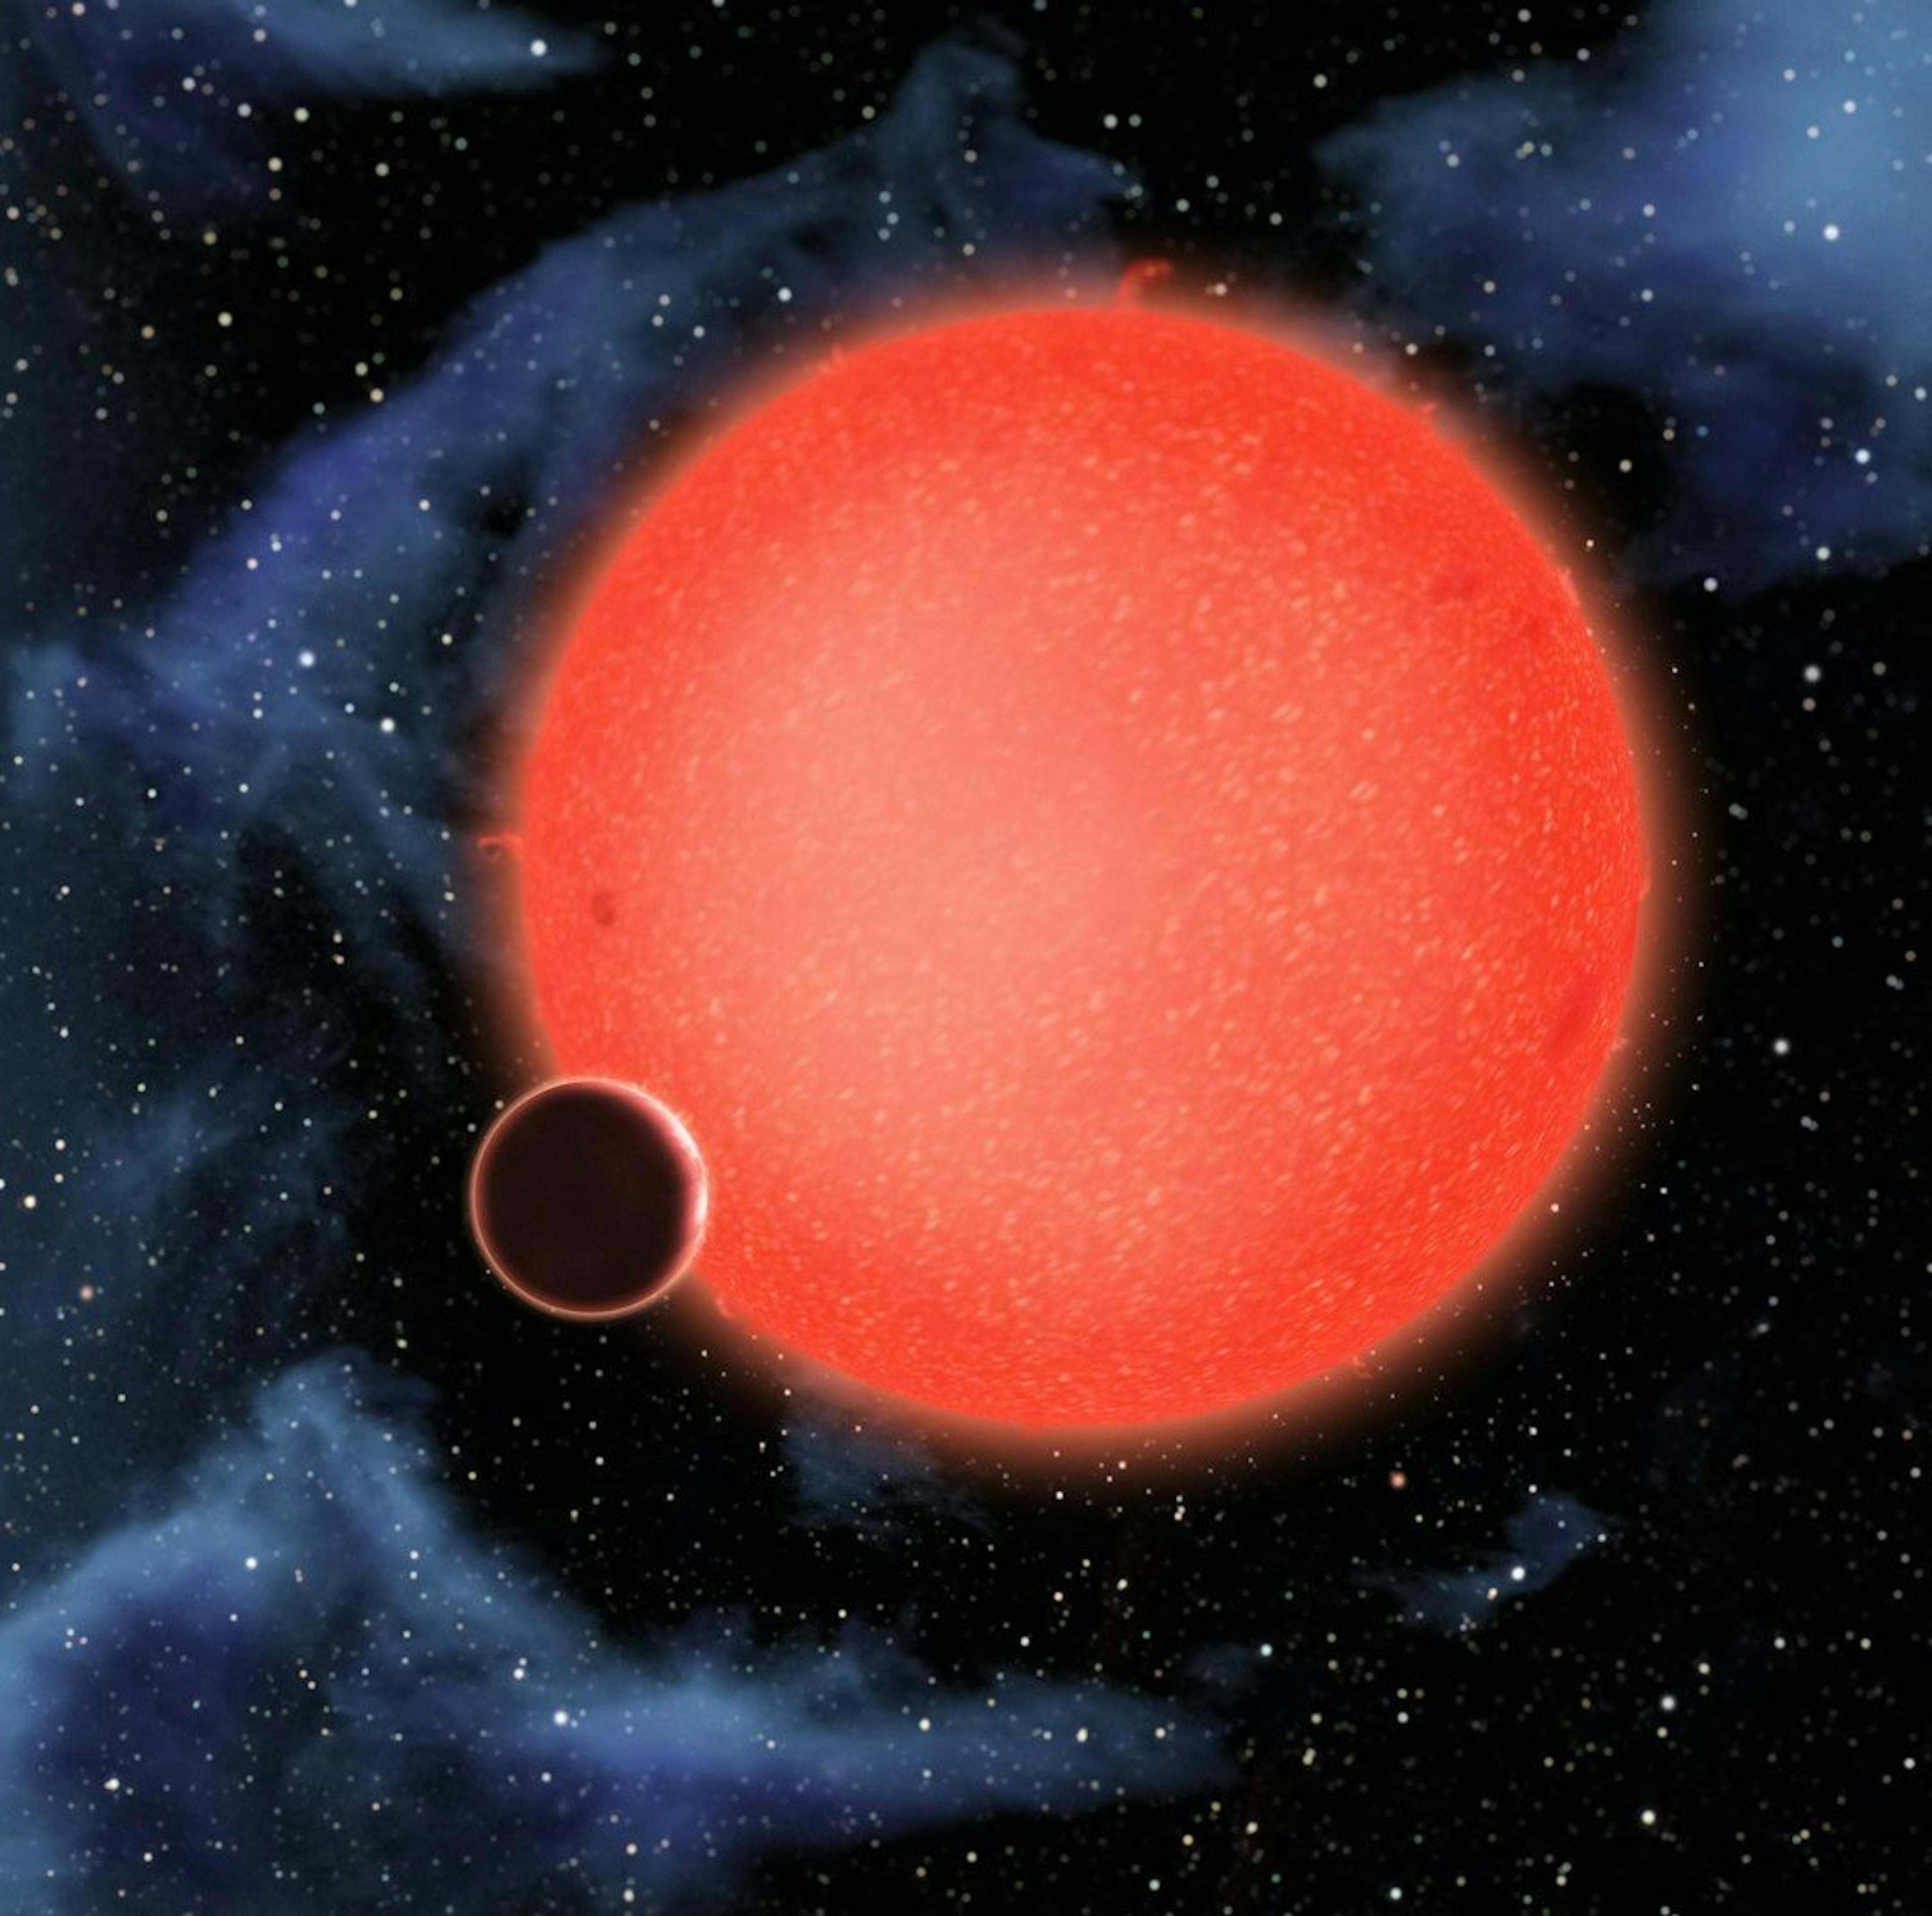 featured image - Thermodynamic Limits Around M-dwarf Stars: Lattice Model of an Oxygenic Light-harvesting System